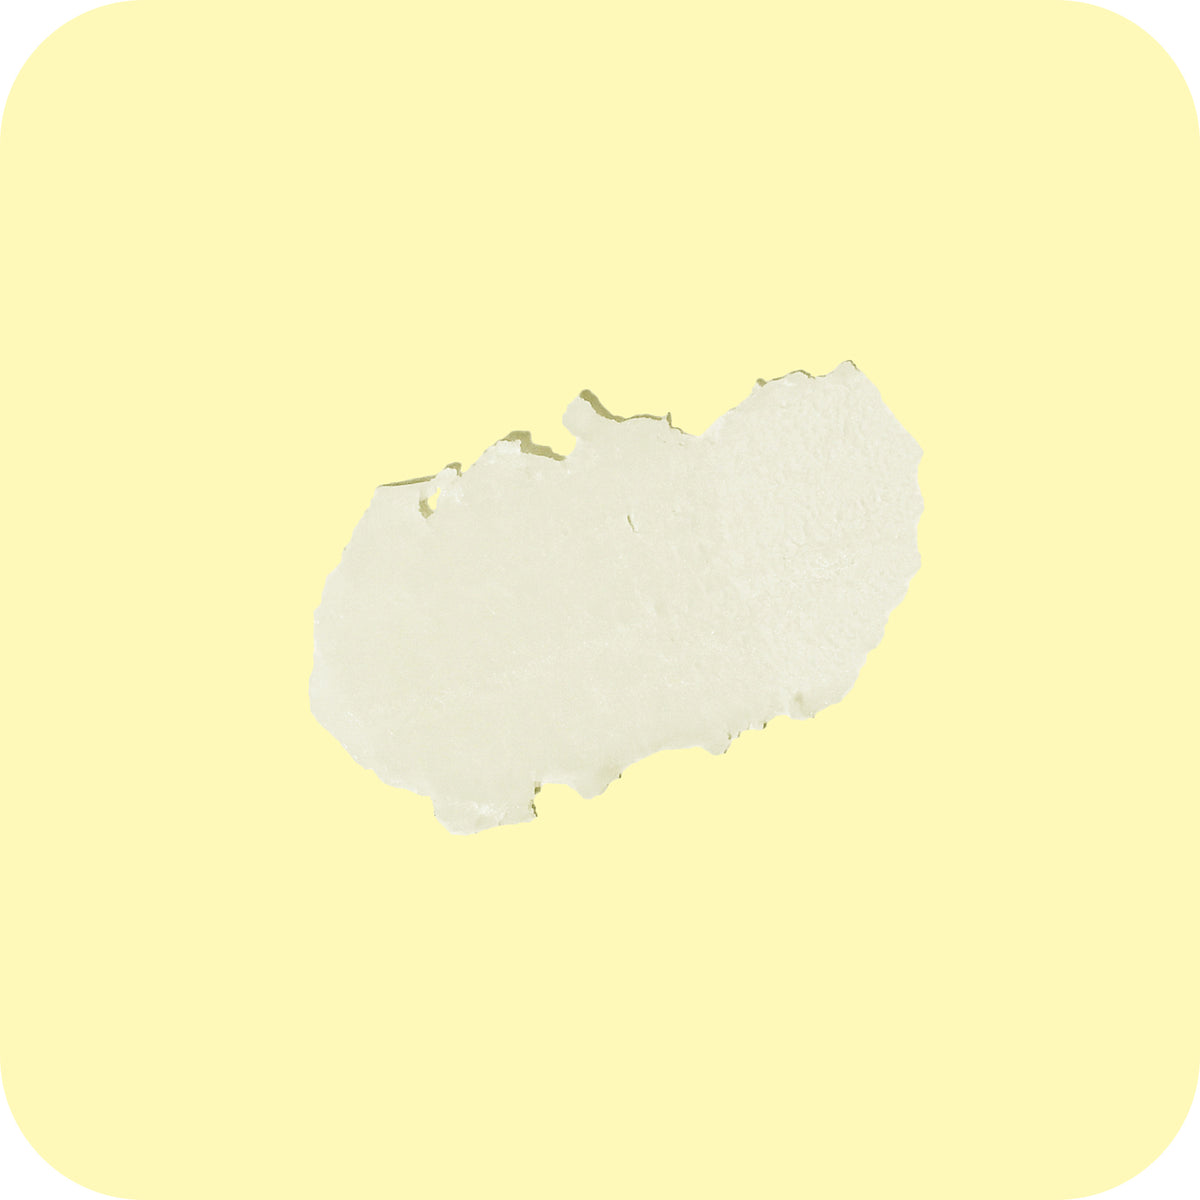 SPF 30 Sunscreen Lip Balm Mango 0.15 Oz